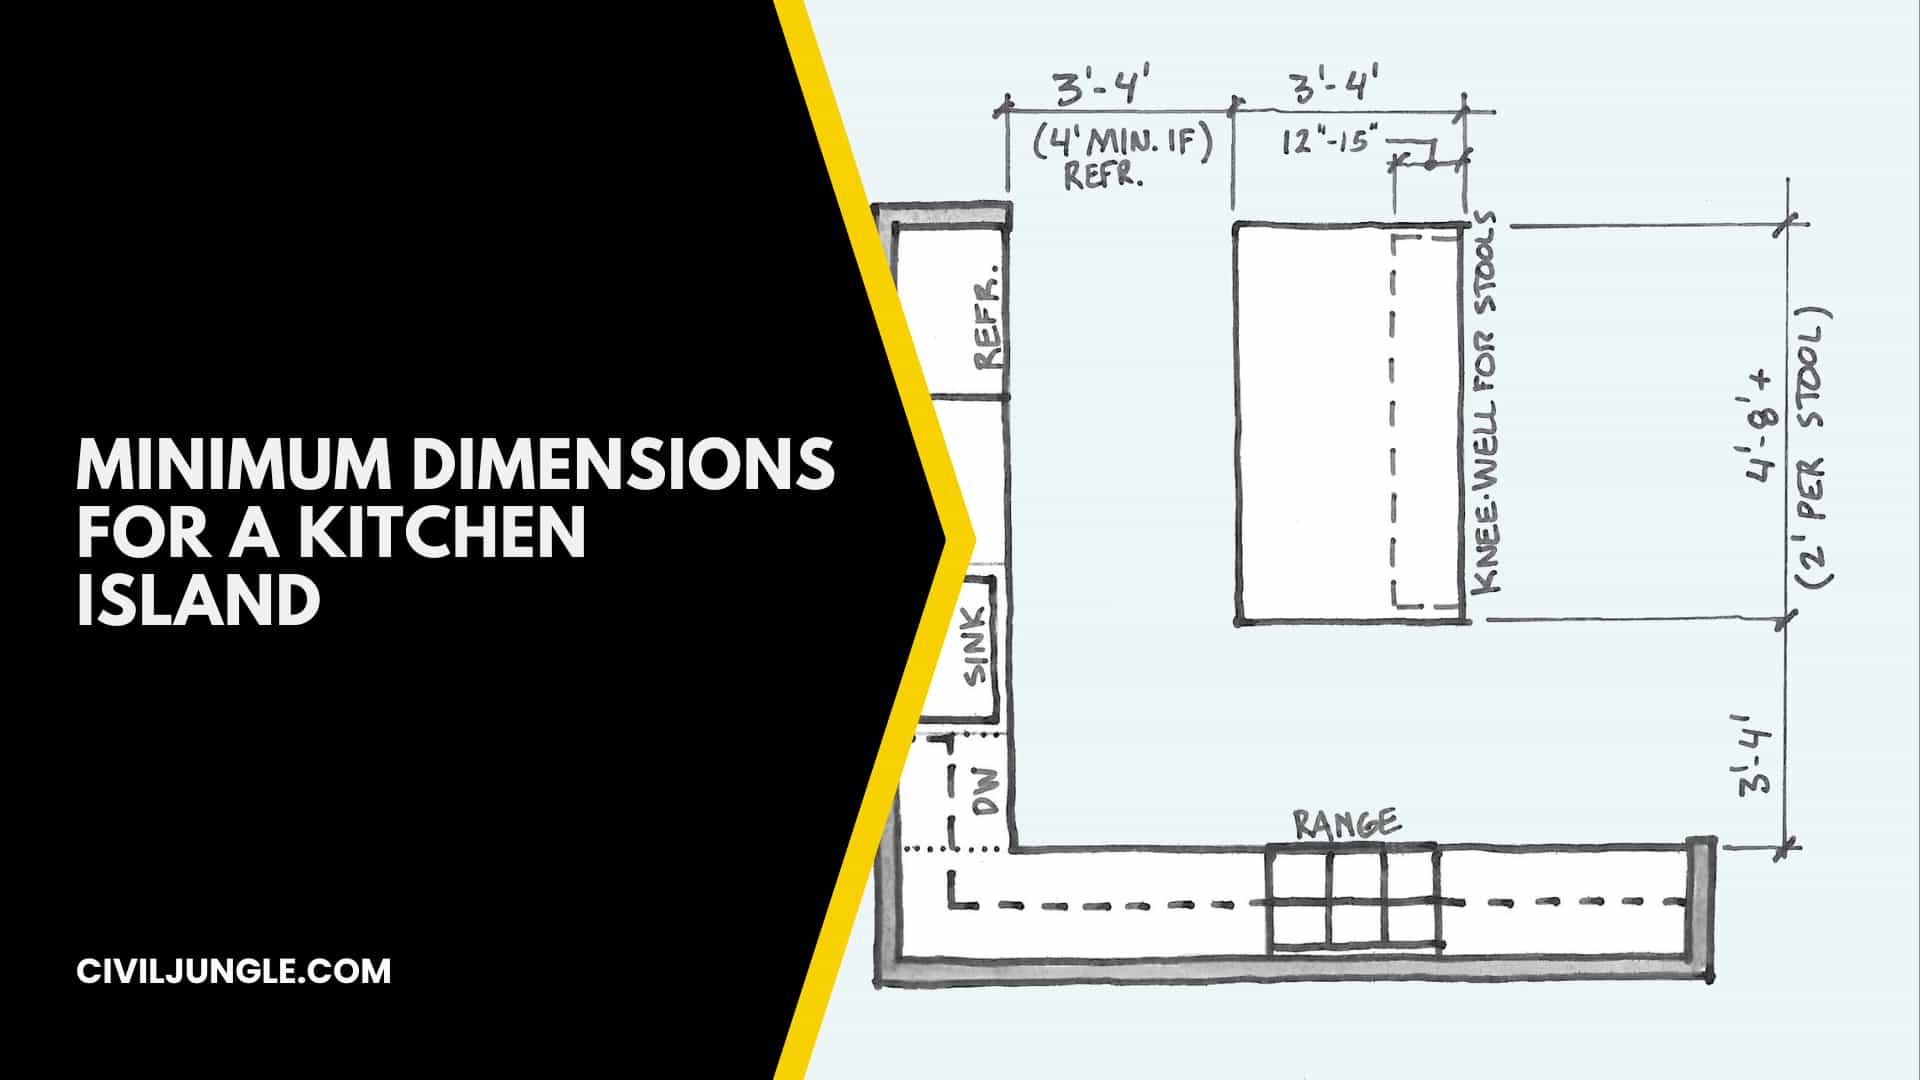 Minimum Dimensions for a Kitchen Island